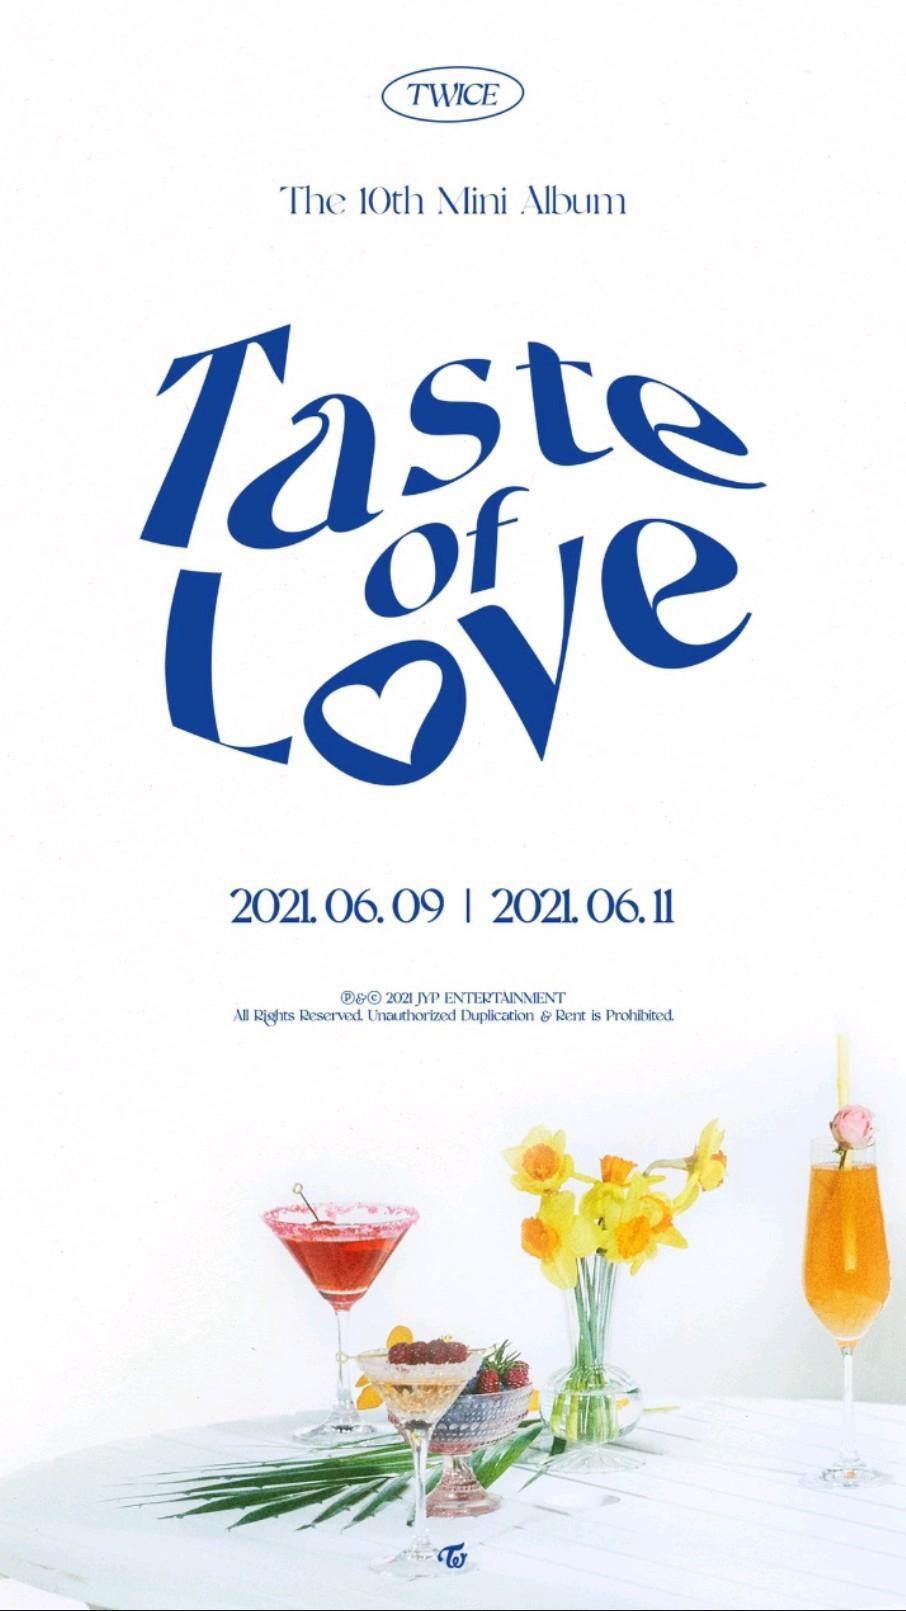 Twice Taste Of Love Wallpapers Top Free Twice Taste Of Love Backgrounds Wallpaperaccess